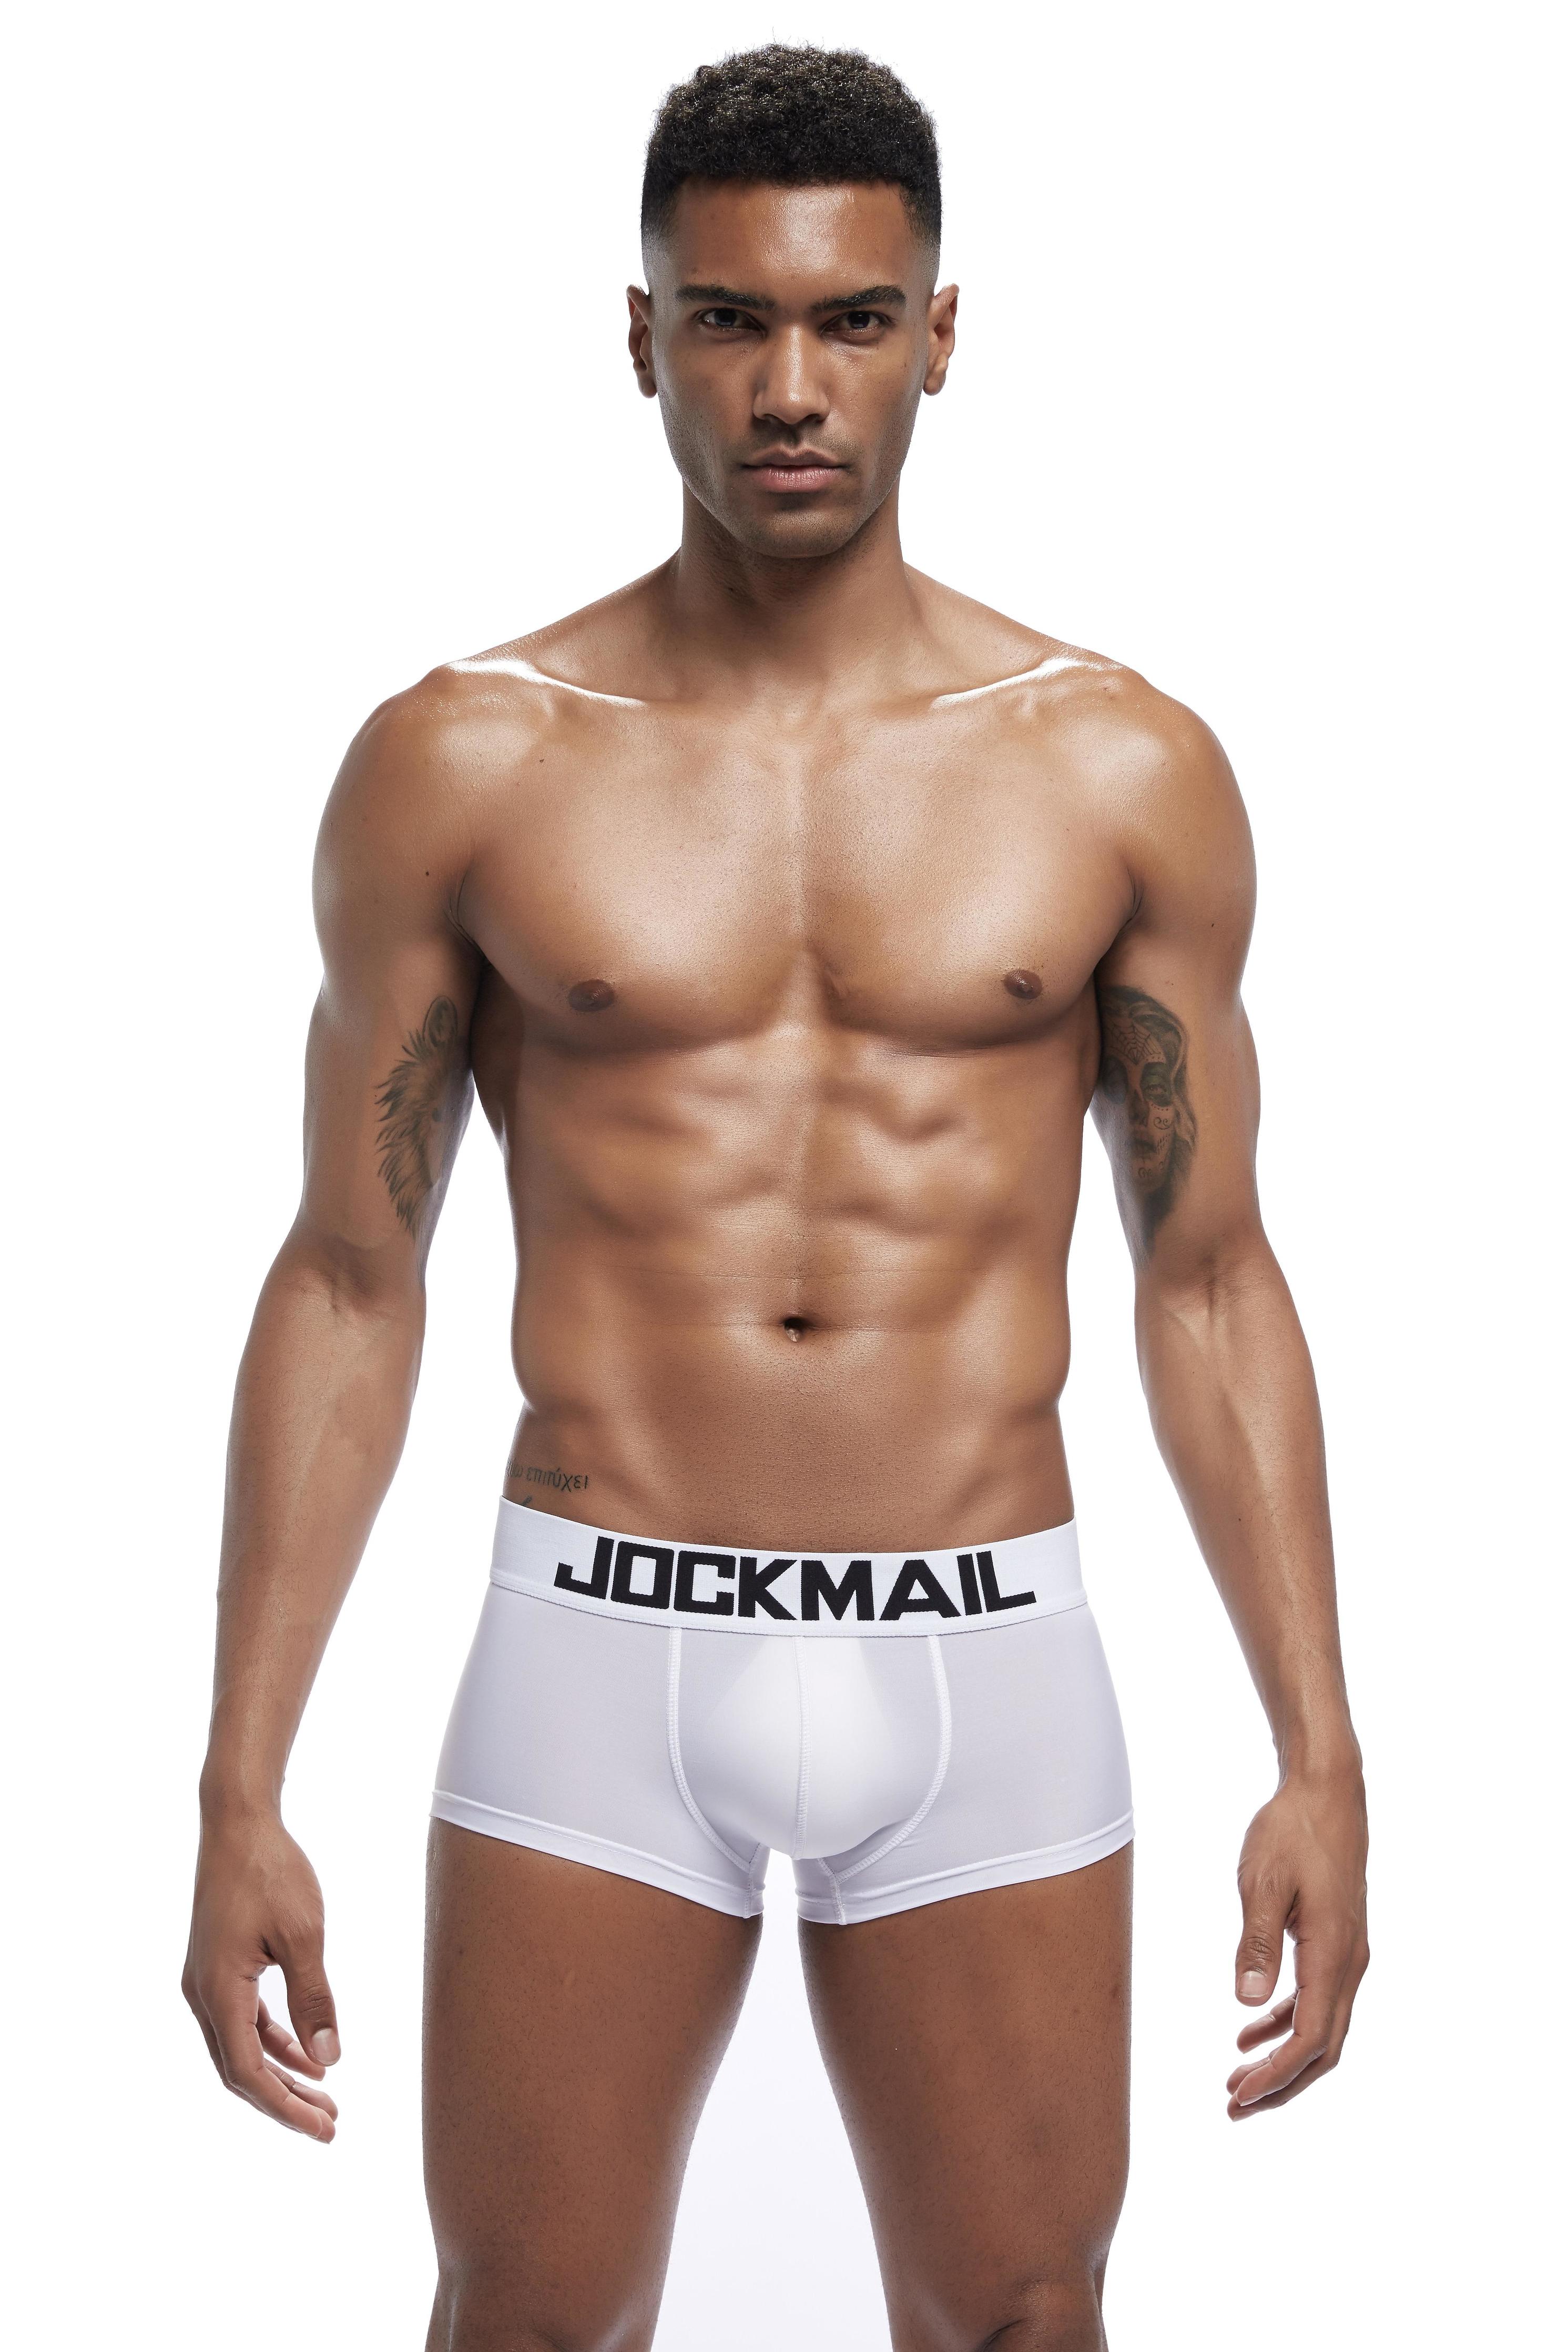 JOCKMAIL Mesh Athletic Supporters Mens Briefs Underwear Comfort